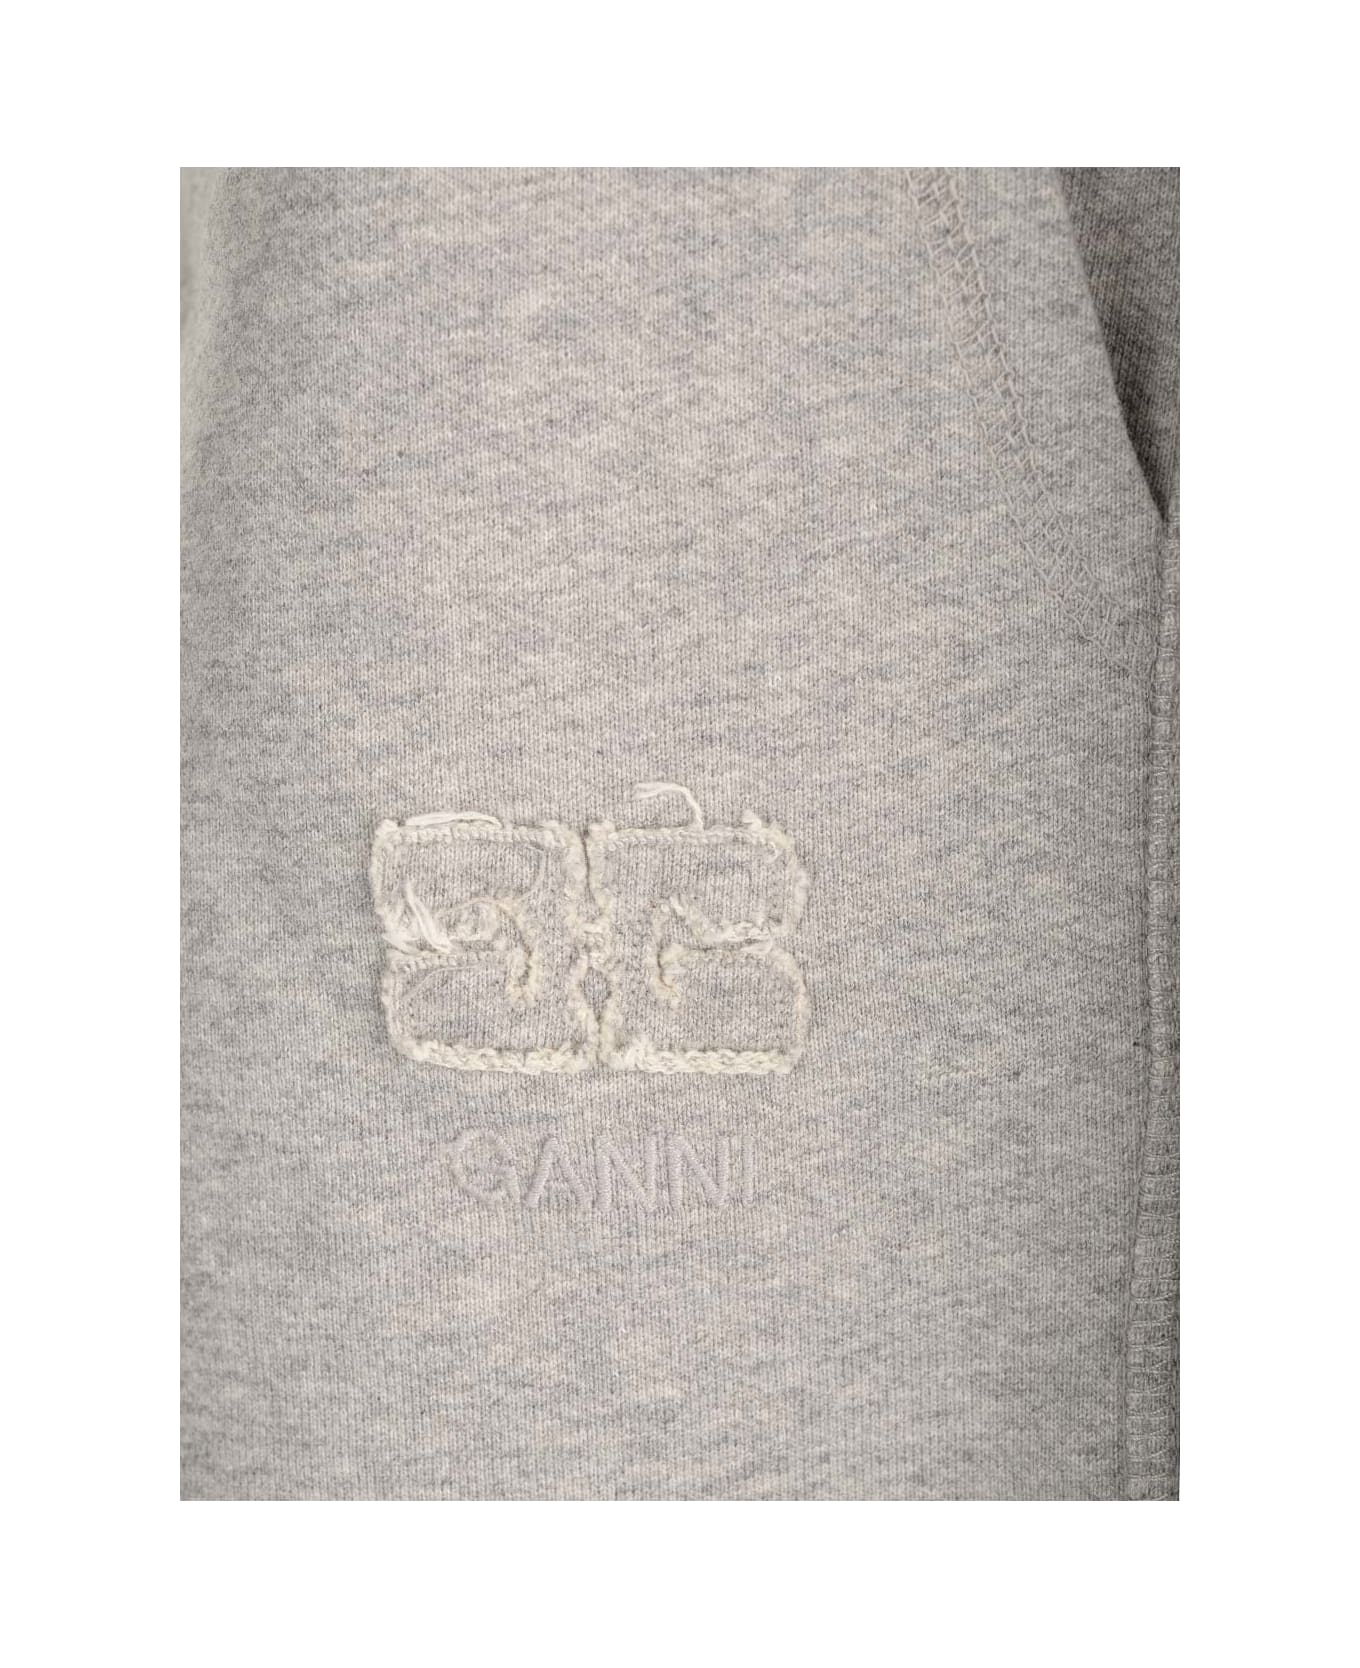 Ganni Grey Shorts With Drawstring - GREY